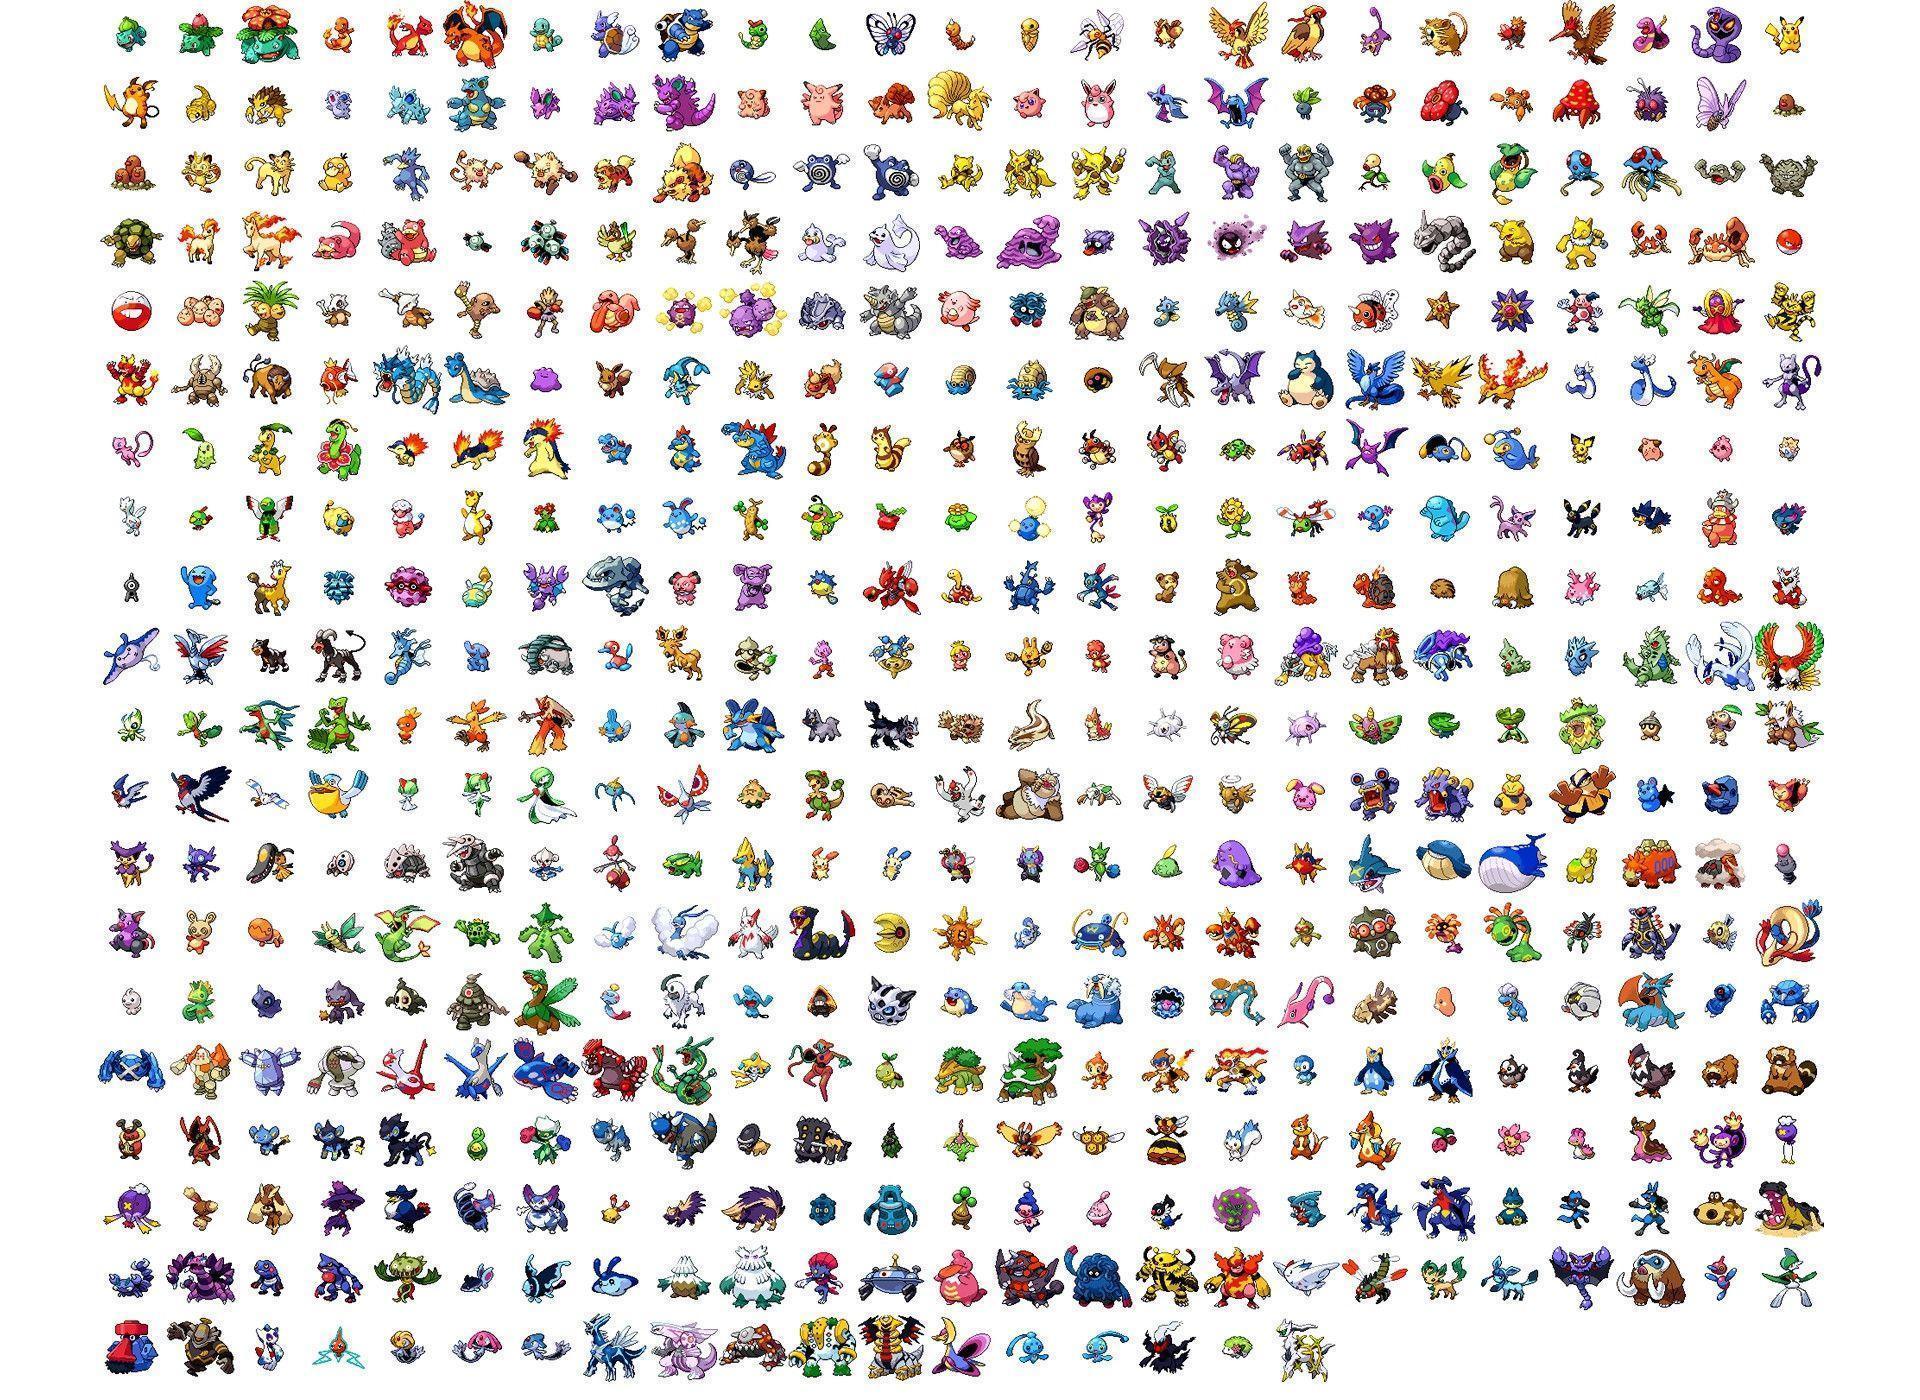 Pokemon Wallpaper Number 4 (1920 x 1400 Pixels)